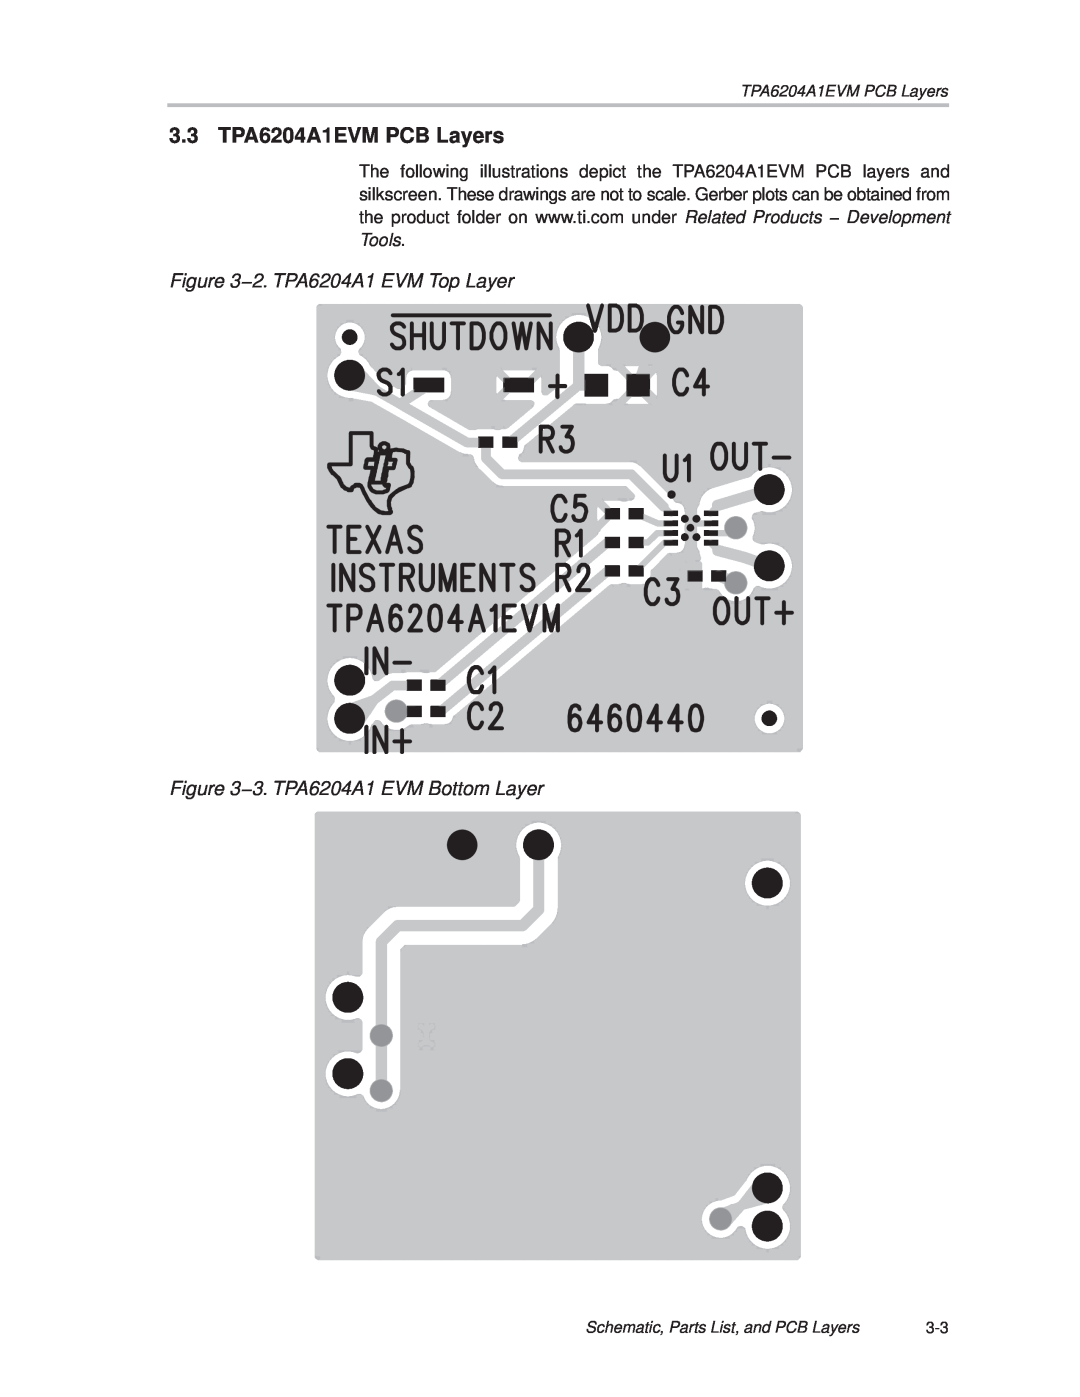 Texas Instruments manual 3.3 TPA6204A1EVM PCB Layers, 2. TPA6204A1 EVM Top Layer, 3. TPA6204A1 EVM Bottom Layer 